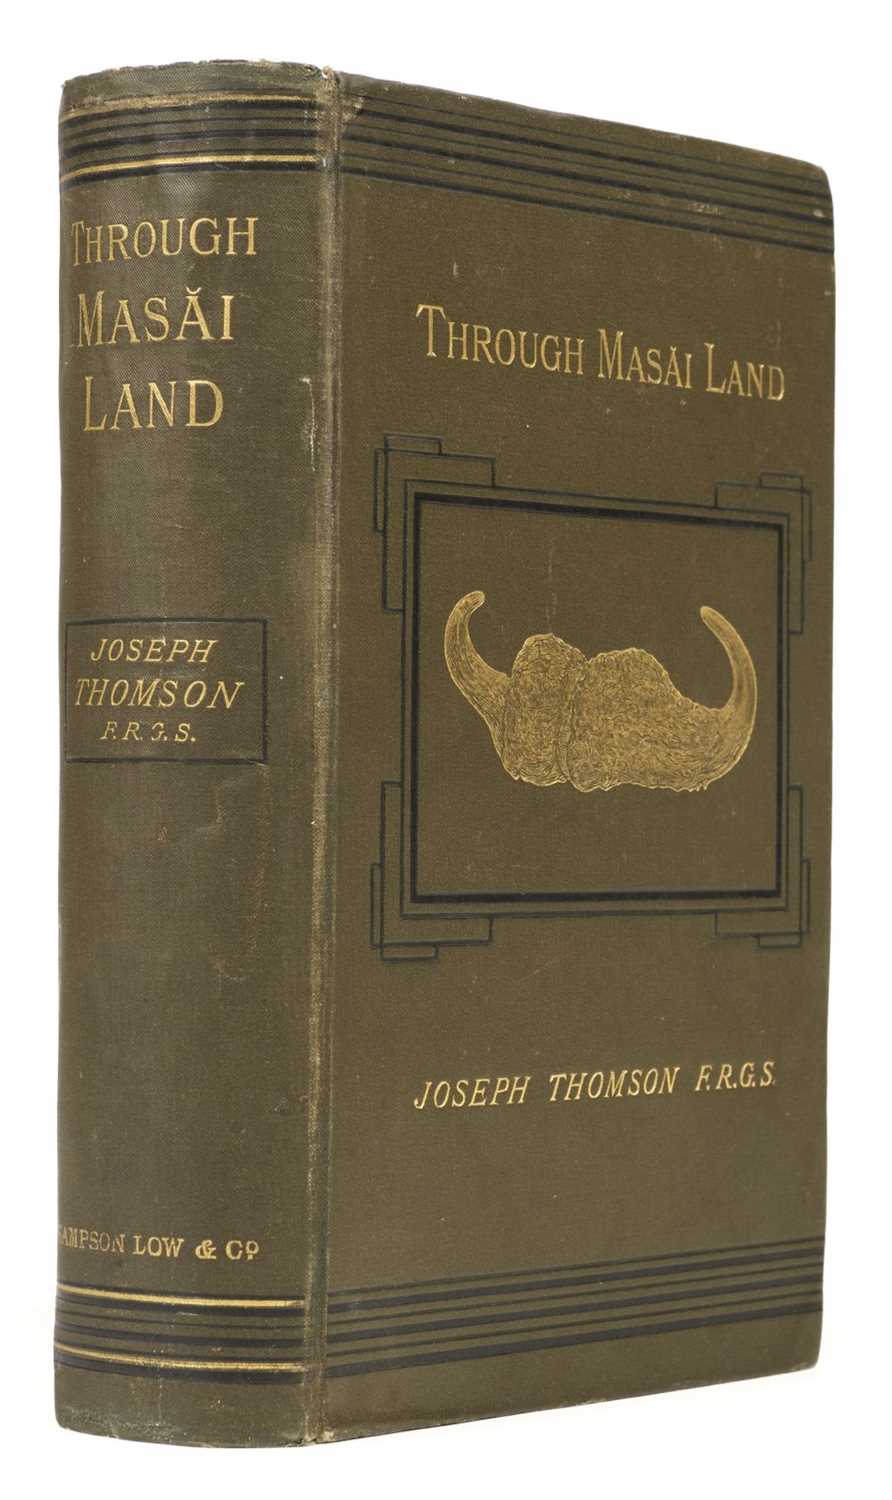 Lot 24 - Thomson (Joseph). Through Masai Land, 1st edition, London: Sampson Low & Co, 1885